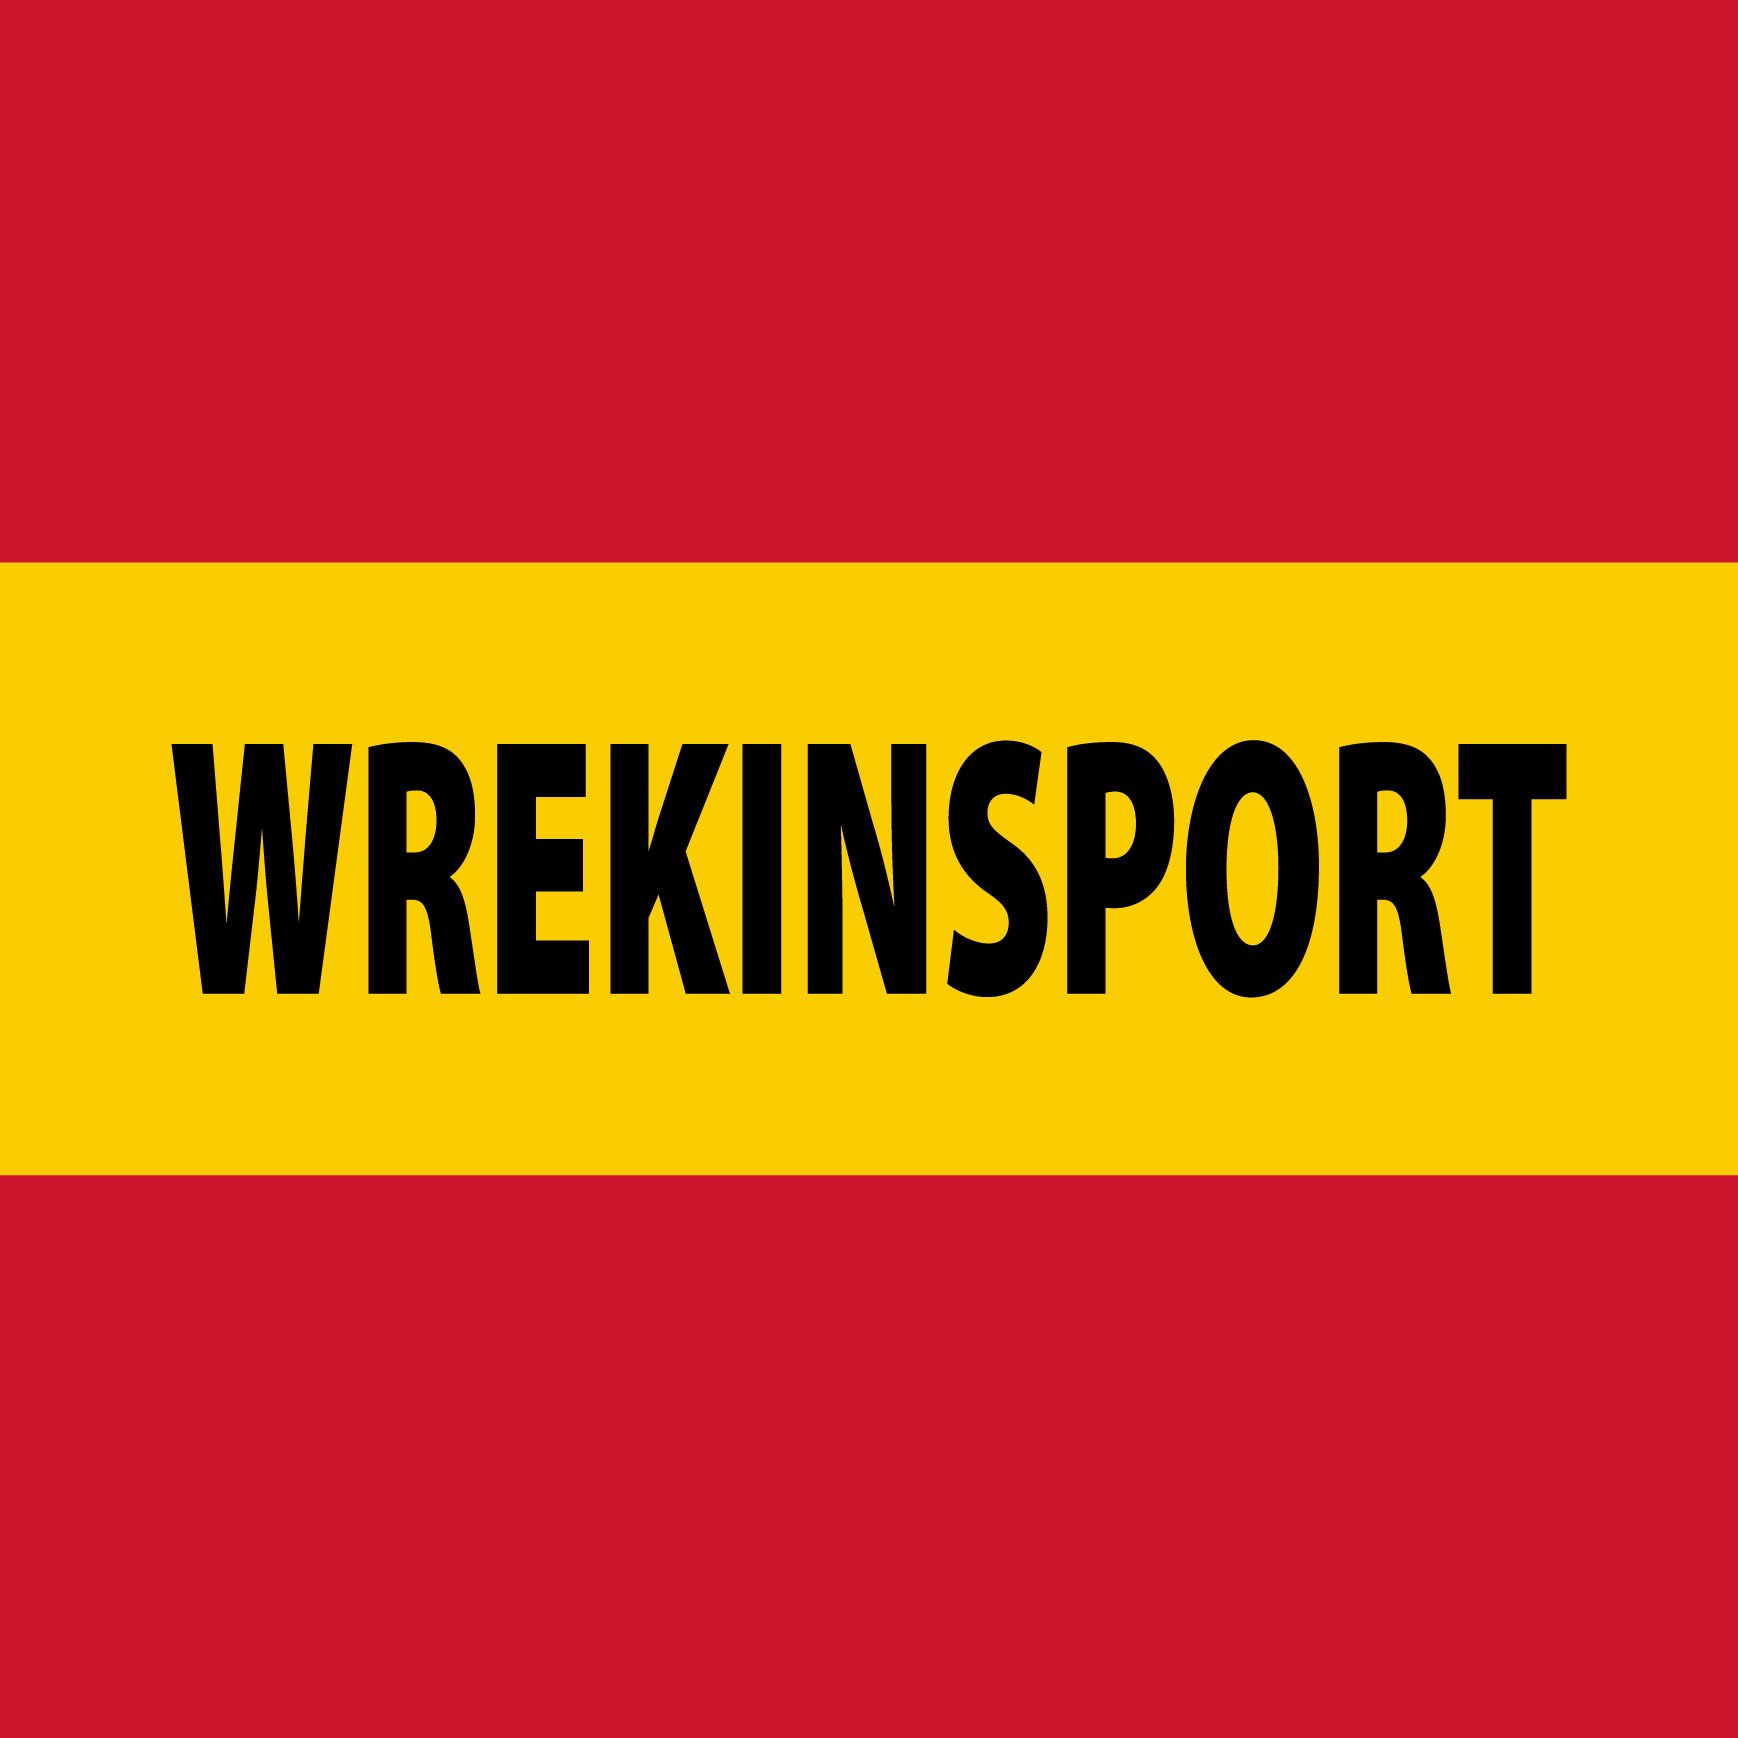 Club Image for WREKINSPORT